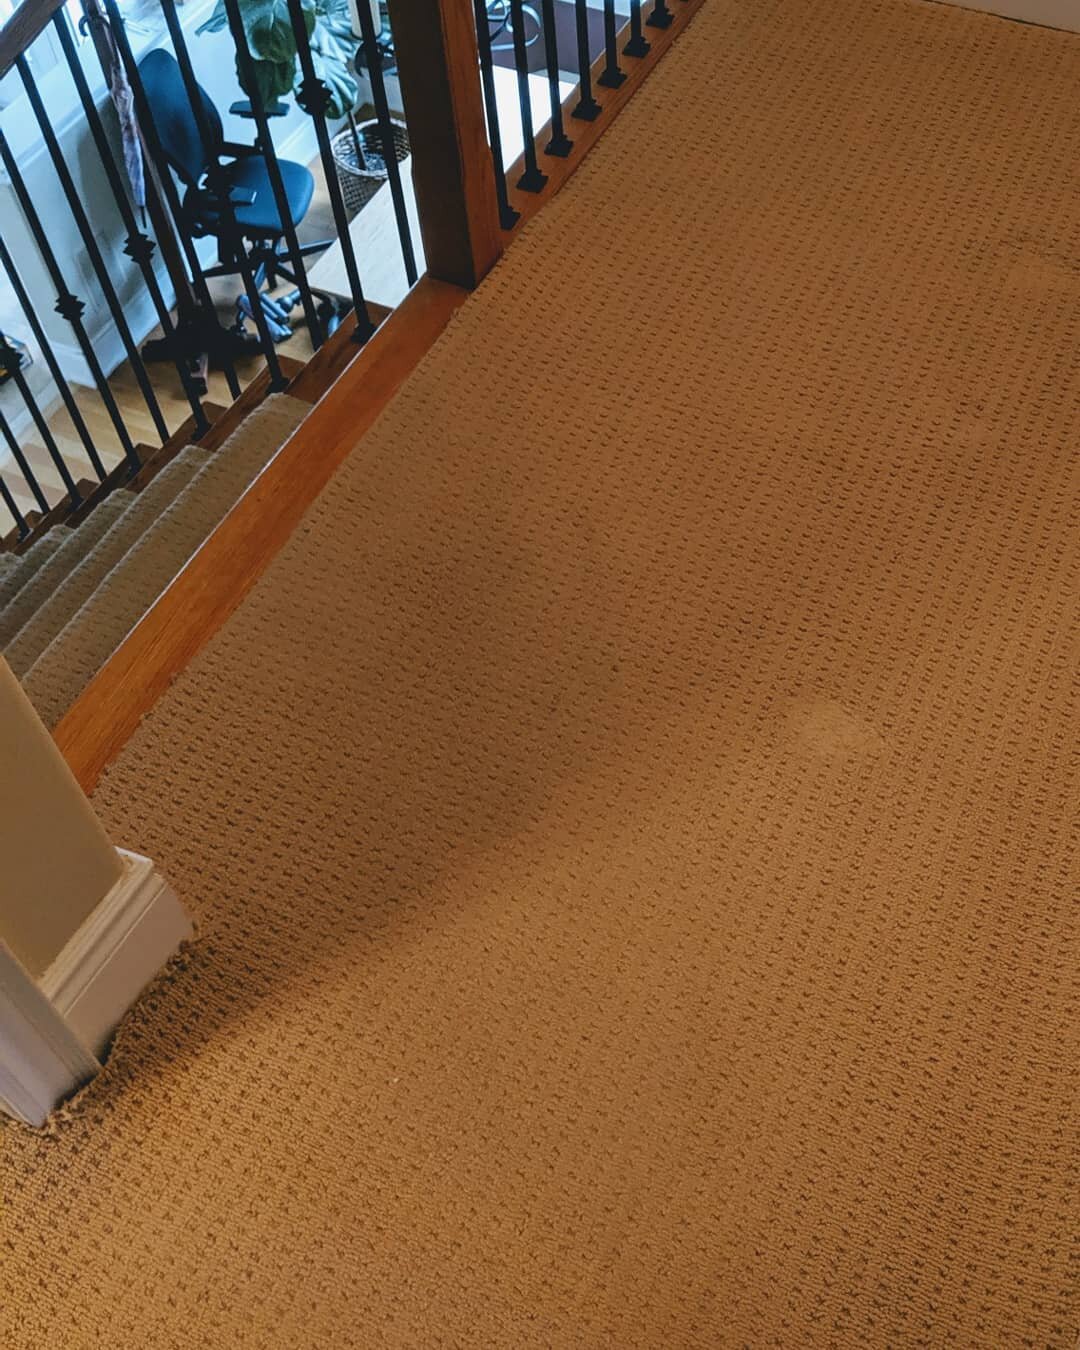 From worn out carpet to beautiful matching hardwood #flooring #hardwoodfloors #bovaflooring